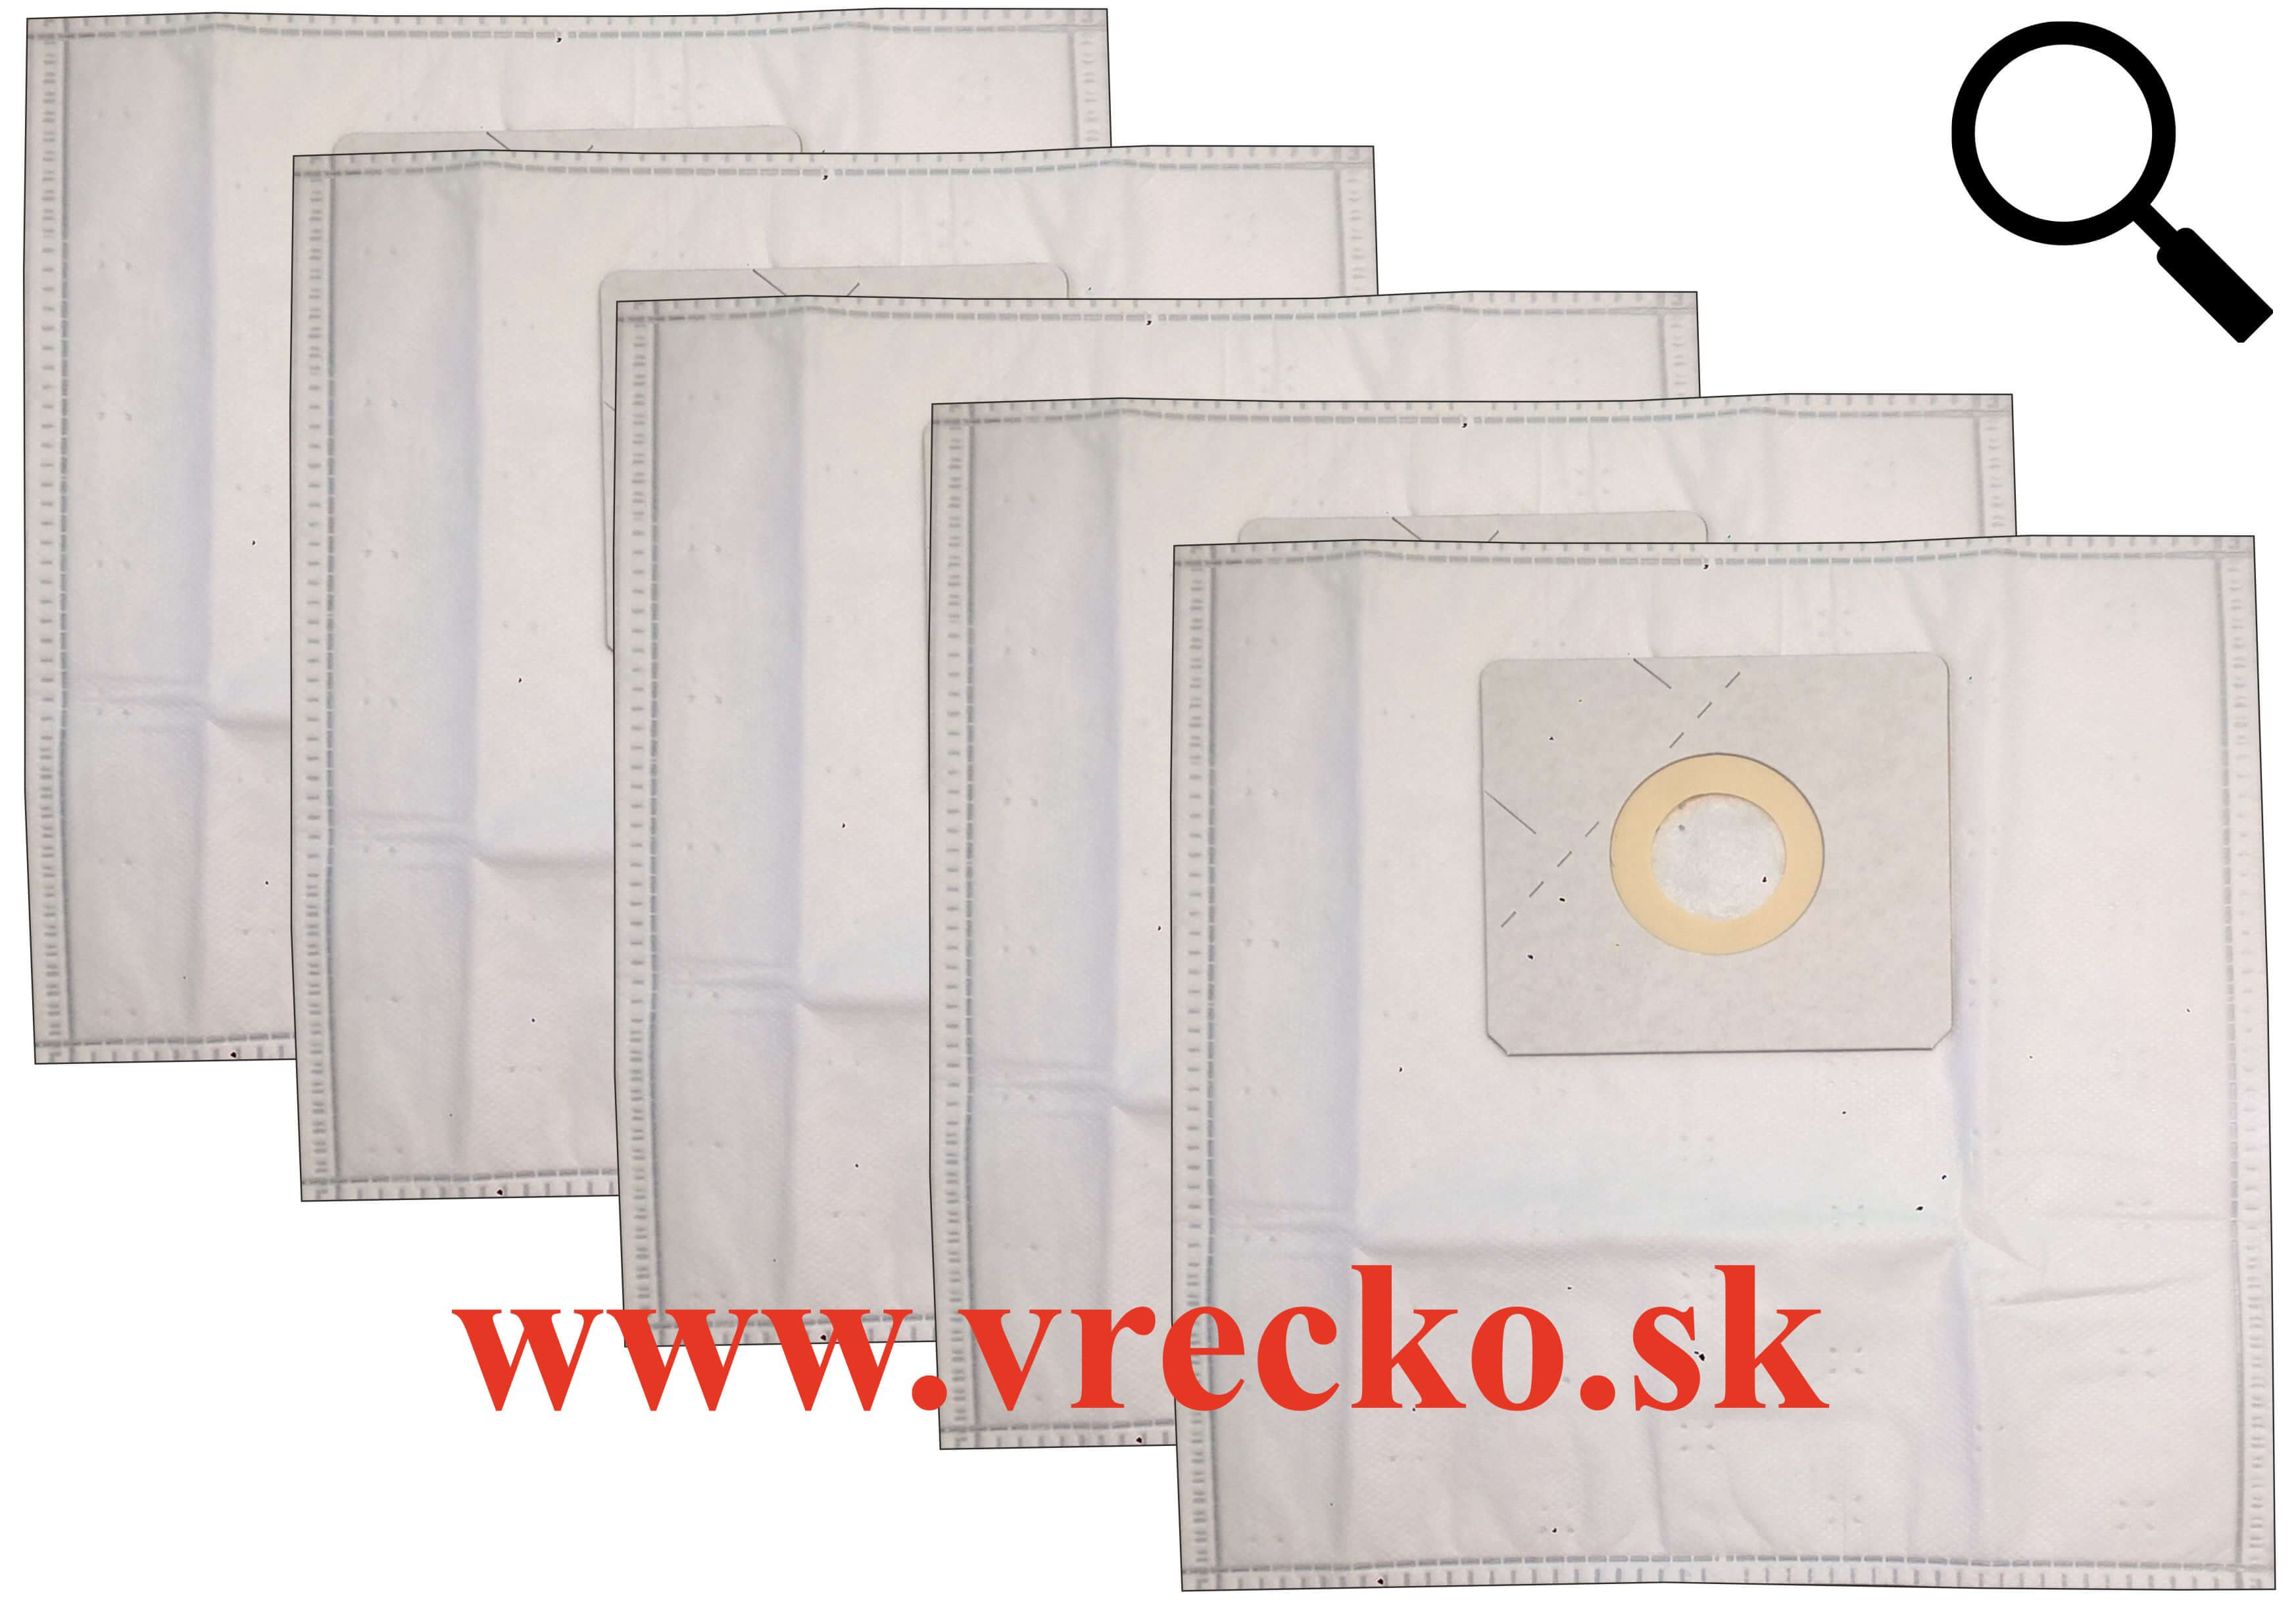 Proline VA 400C textilné vrecká do vysávača, 5ks